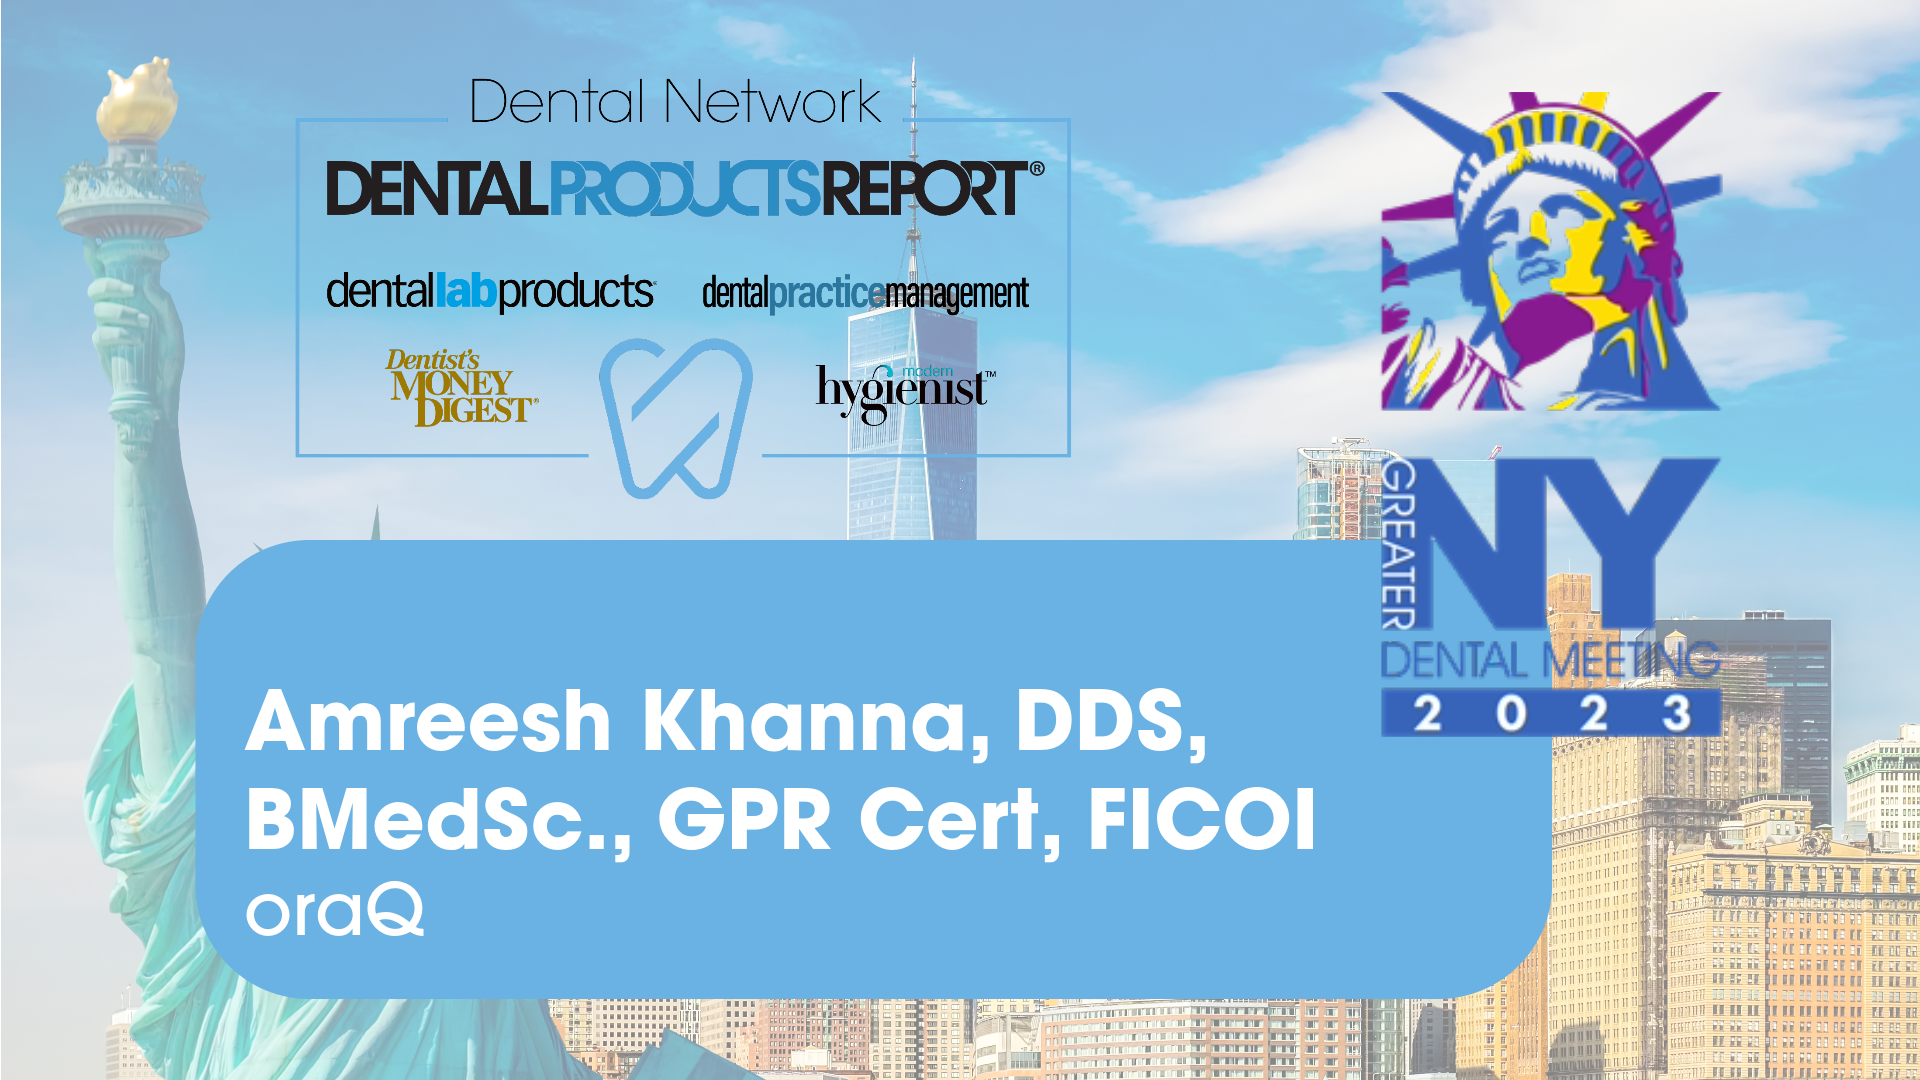 Greater New York Dental Meeting 2023 – Interview with Amreesh Khanna, DDS, BMedSc., GPR Cert, FICOI